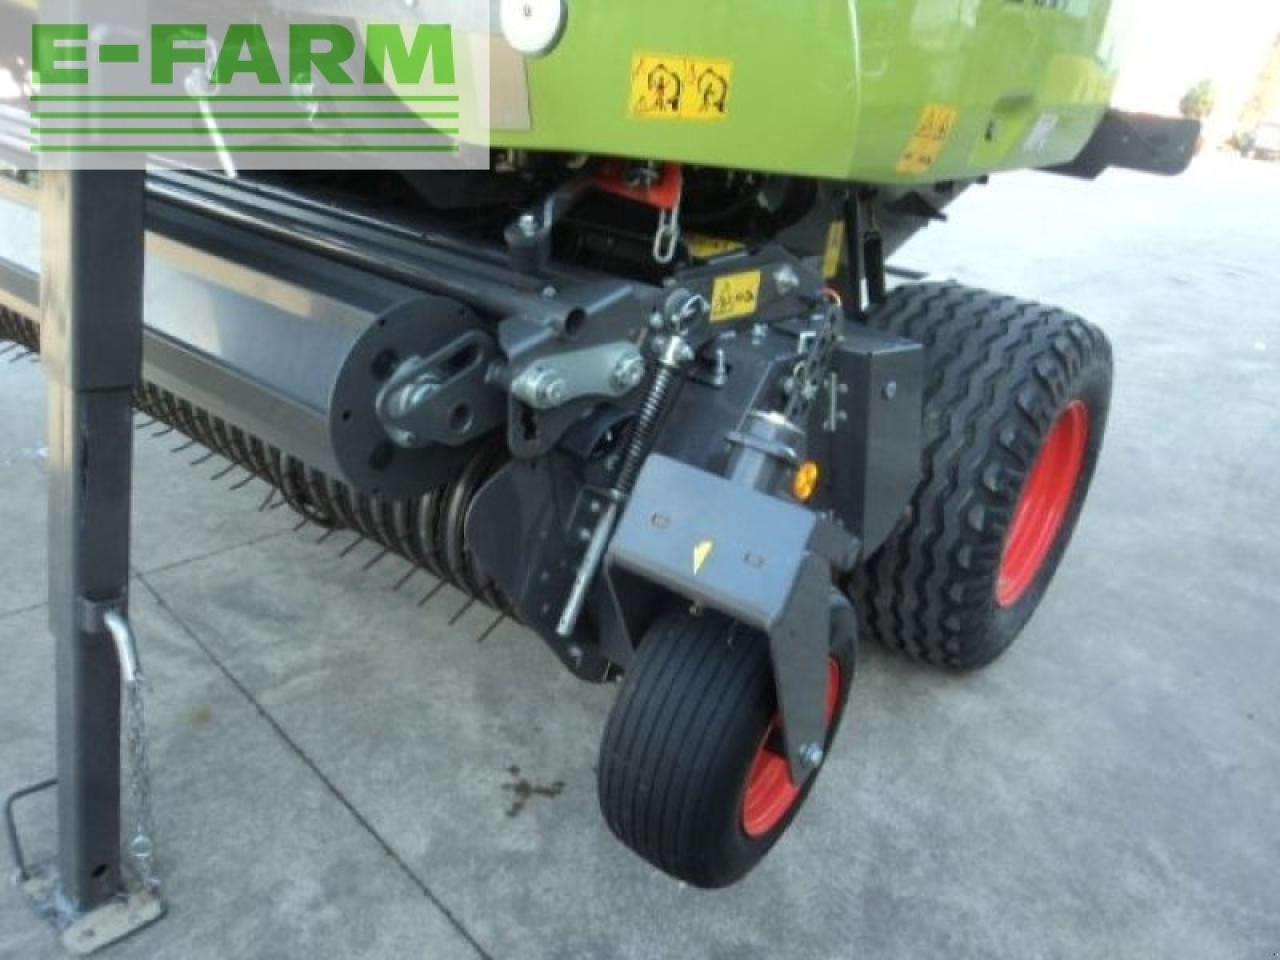 Farm tractor CLAAS variant 485 rc